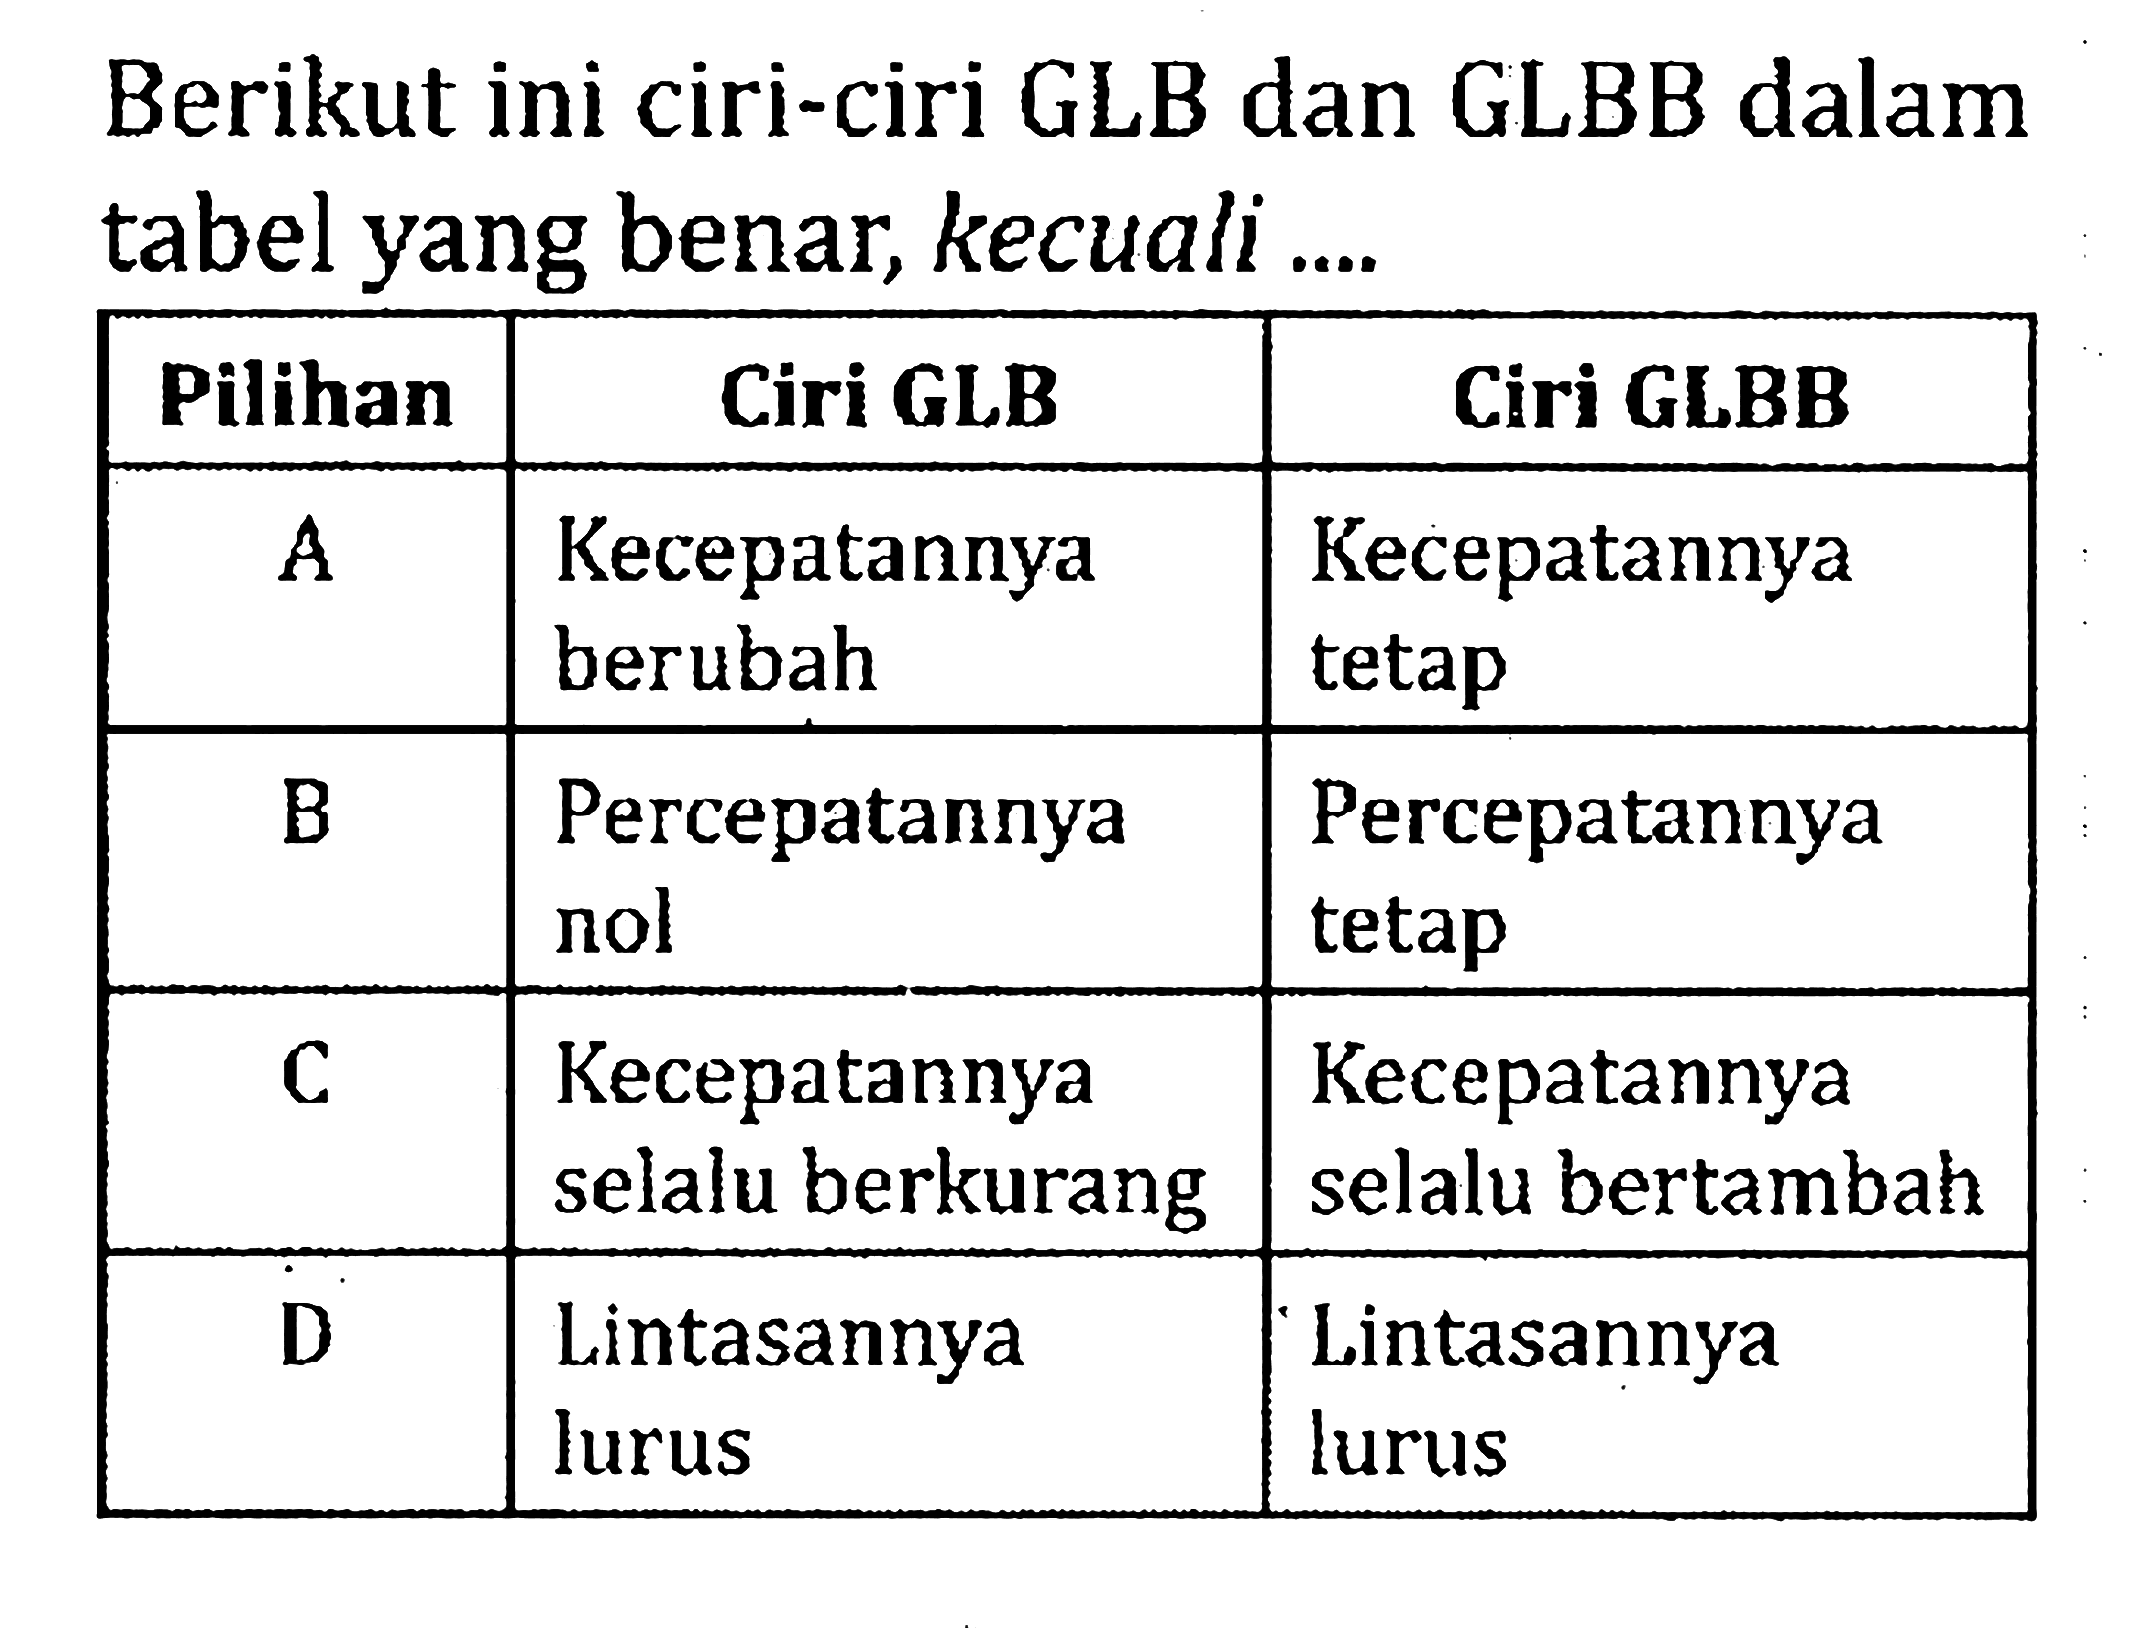 Berikut ini ciri-ciri GLB dan GLBB dalam tabel yang benar, kecuali ...